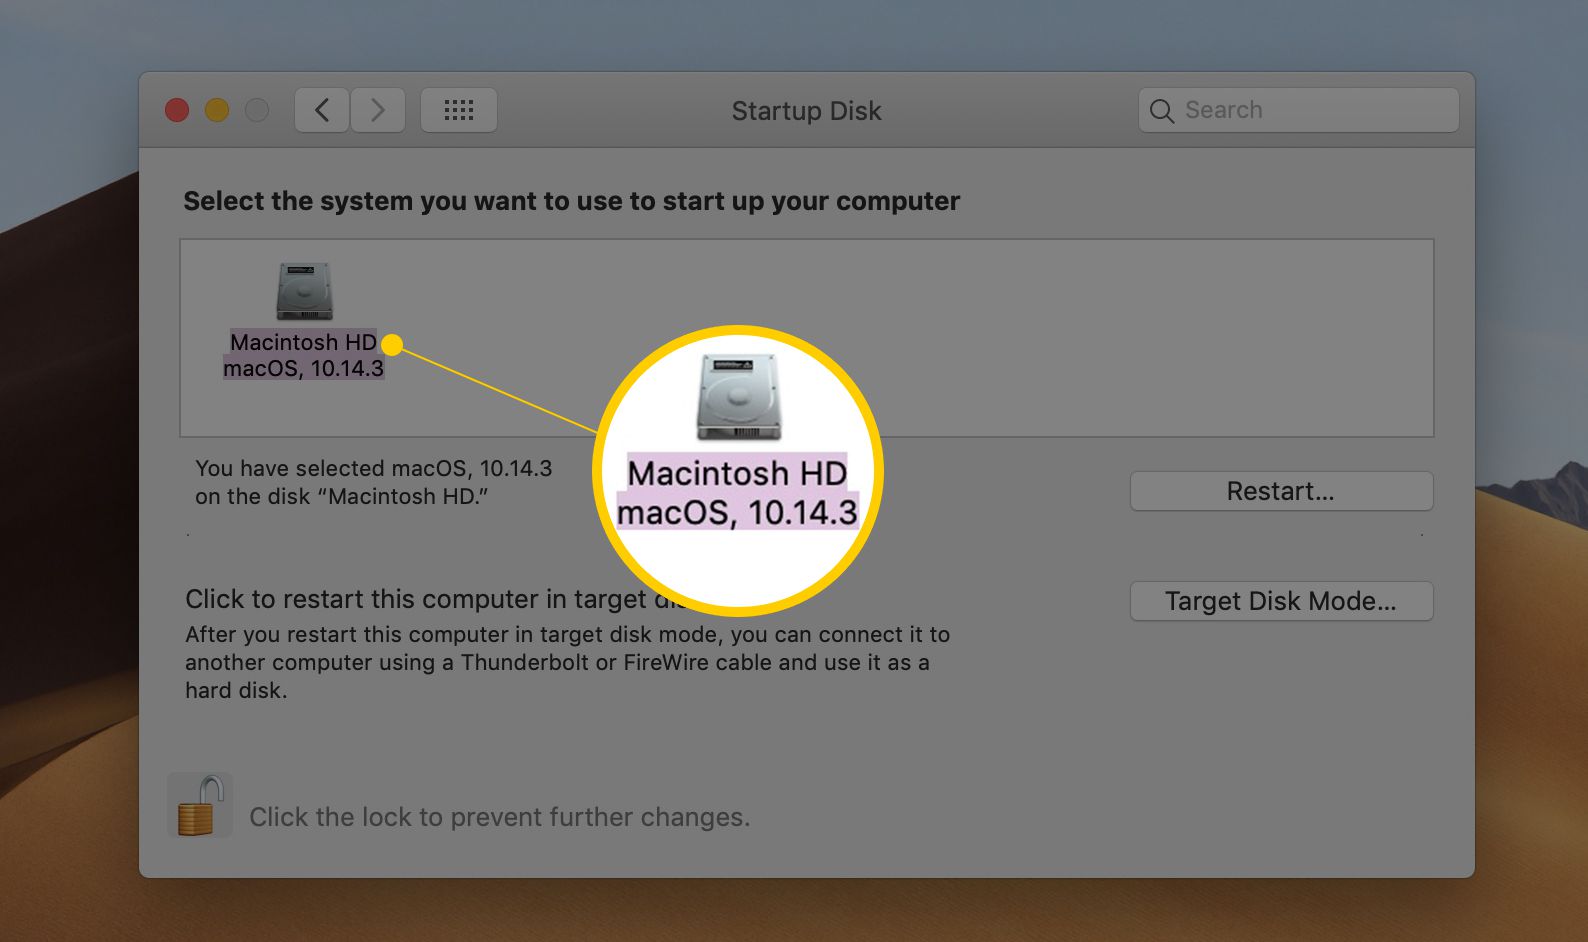 Macintosh HD vald som startdisk